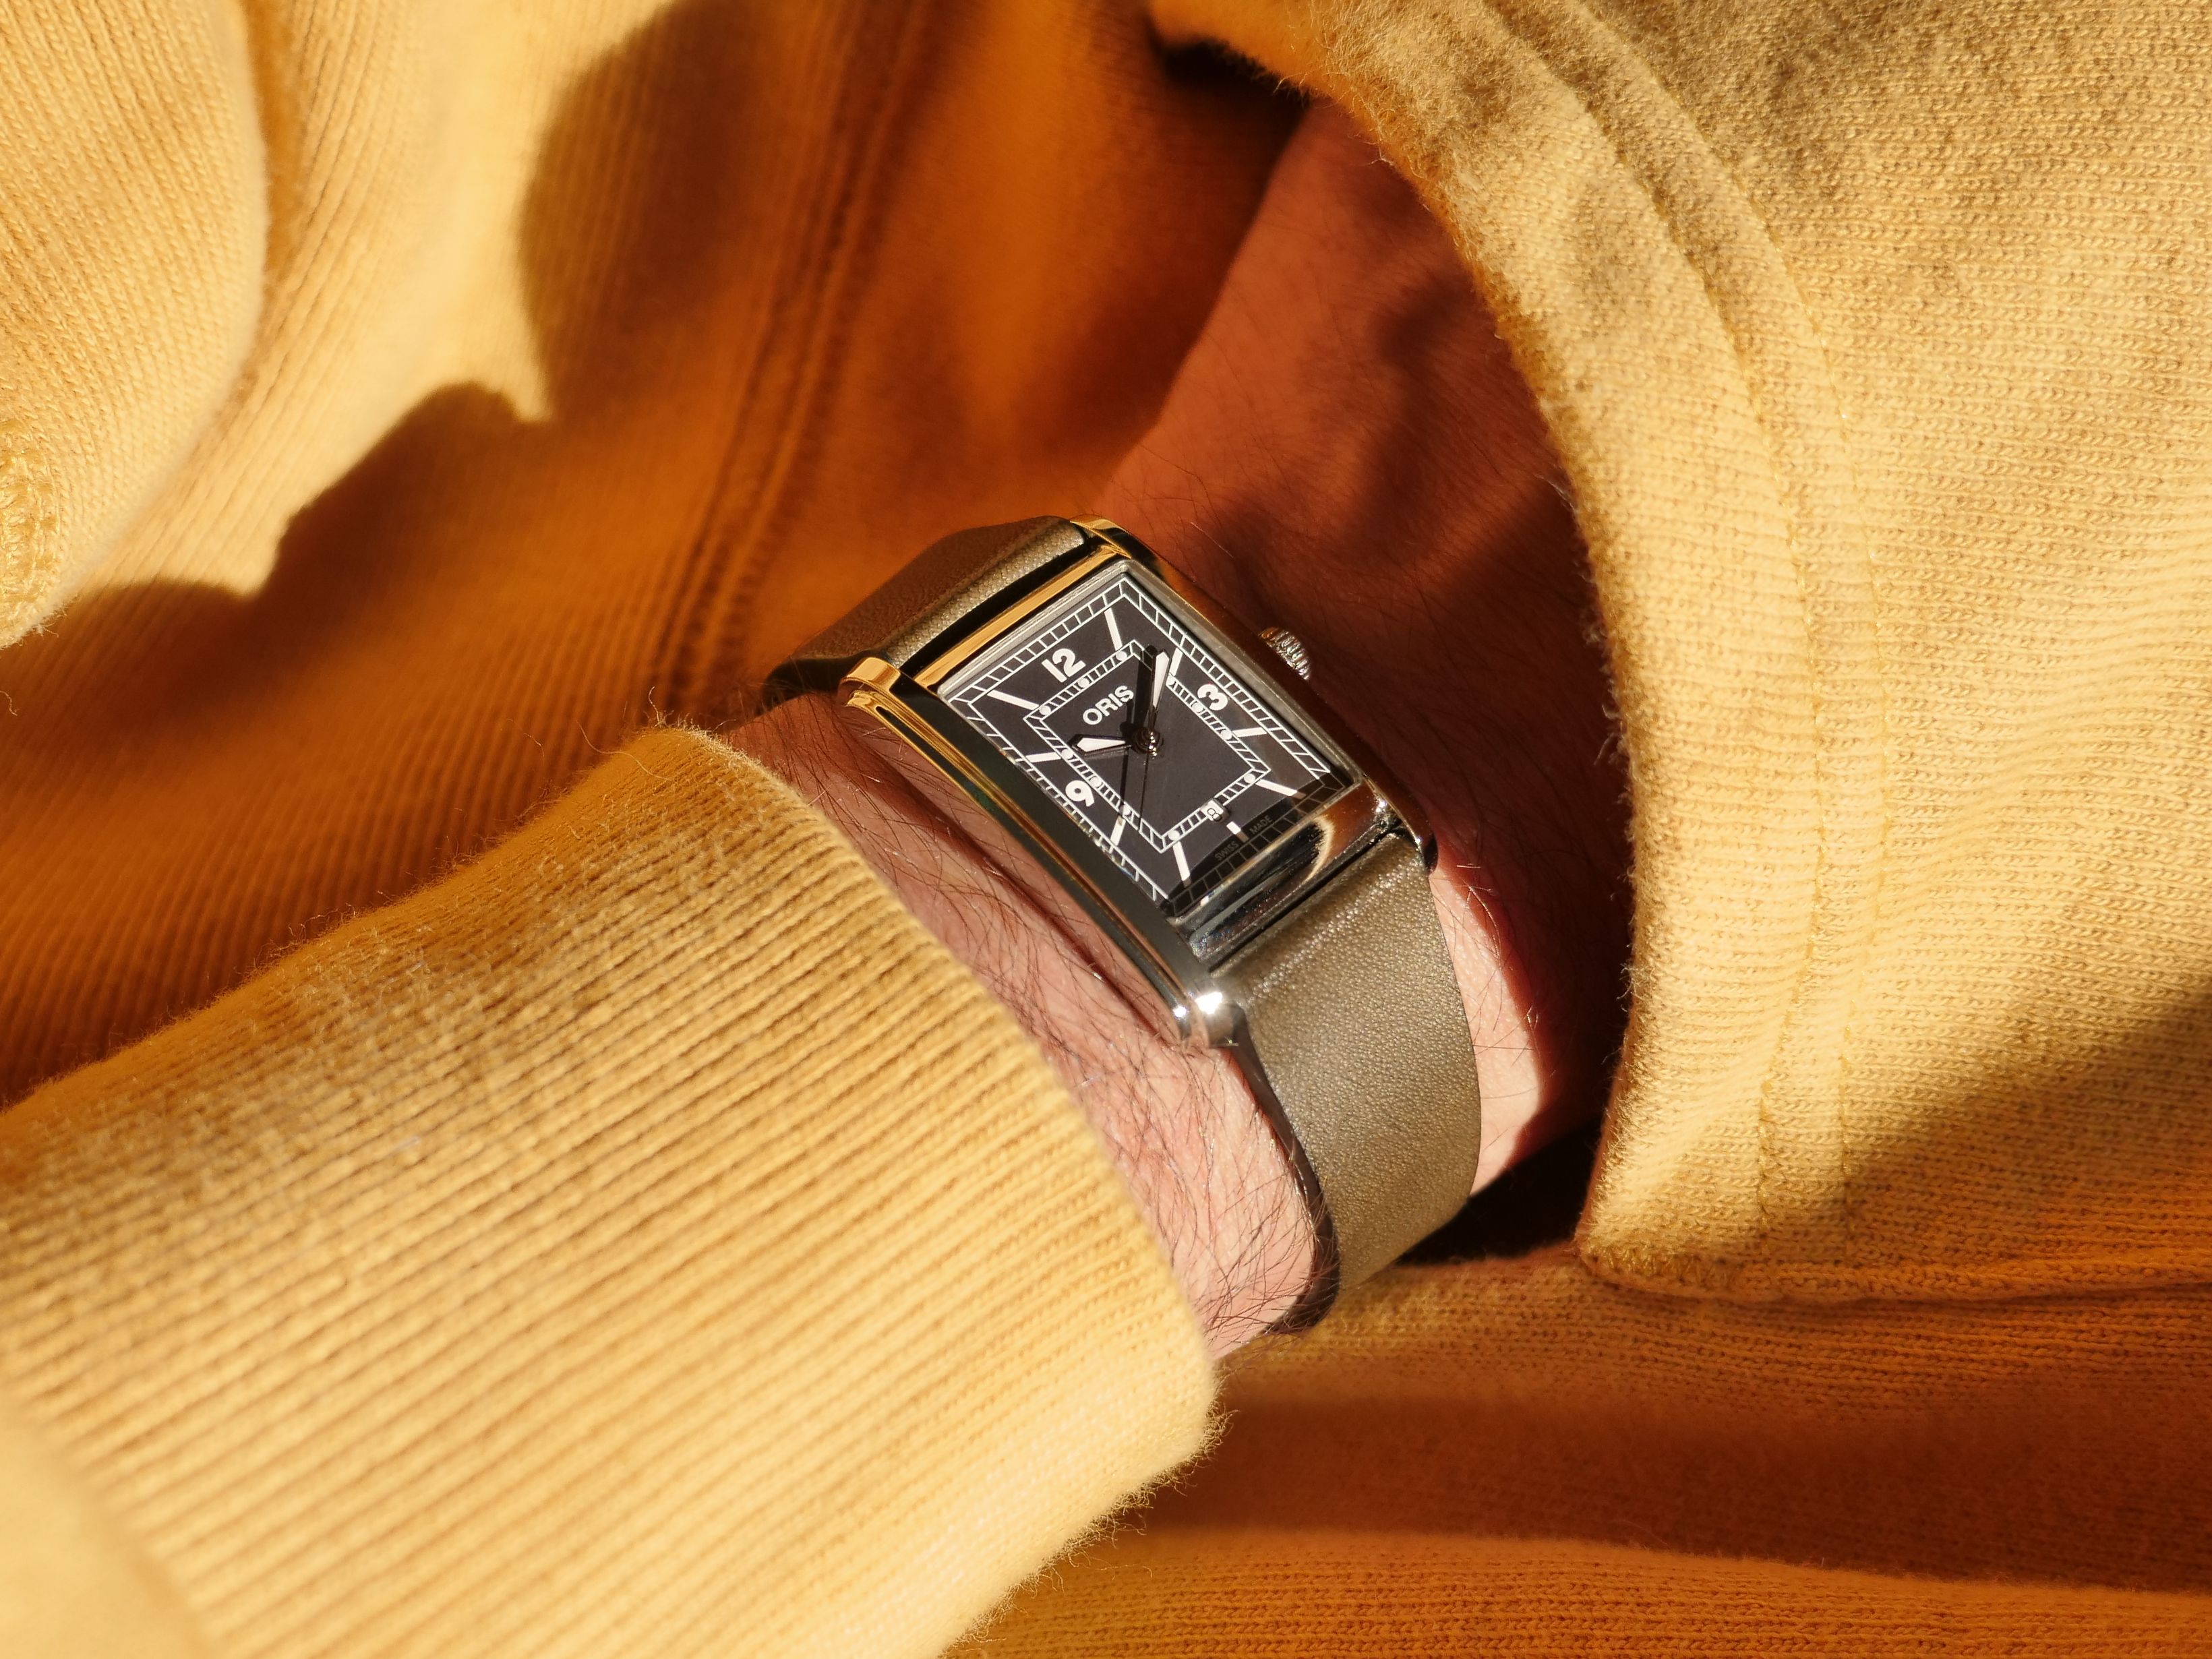 Oris Rectangular Watch, Tested: The Best Alternative to the Cartier Tank?